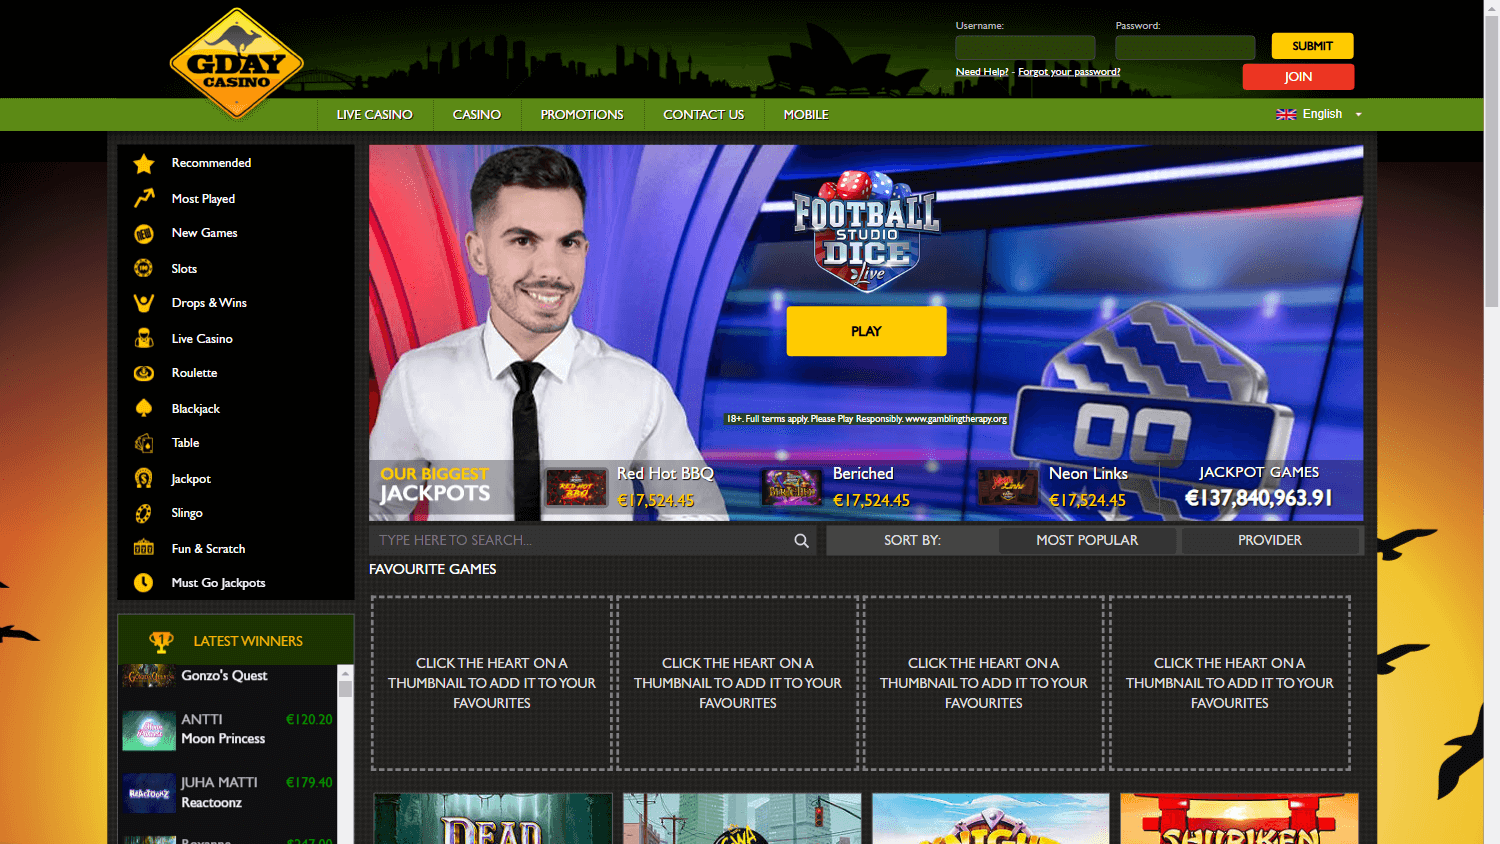 gday_casino_homepage_desktop